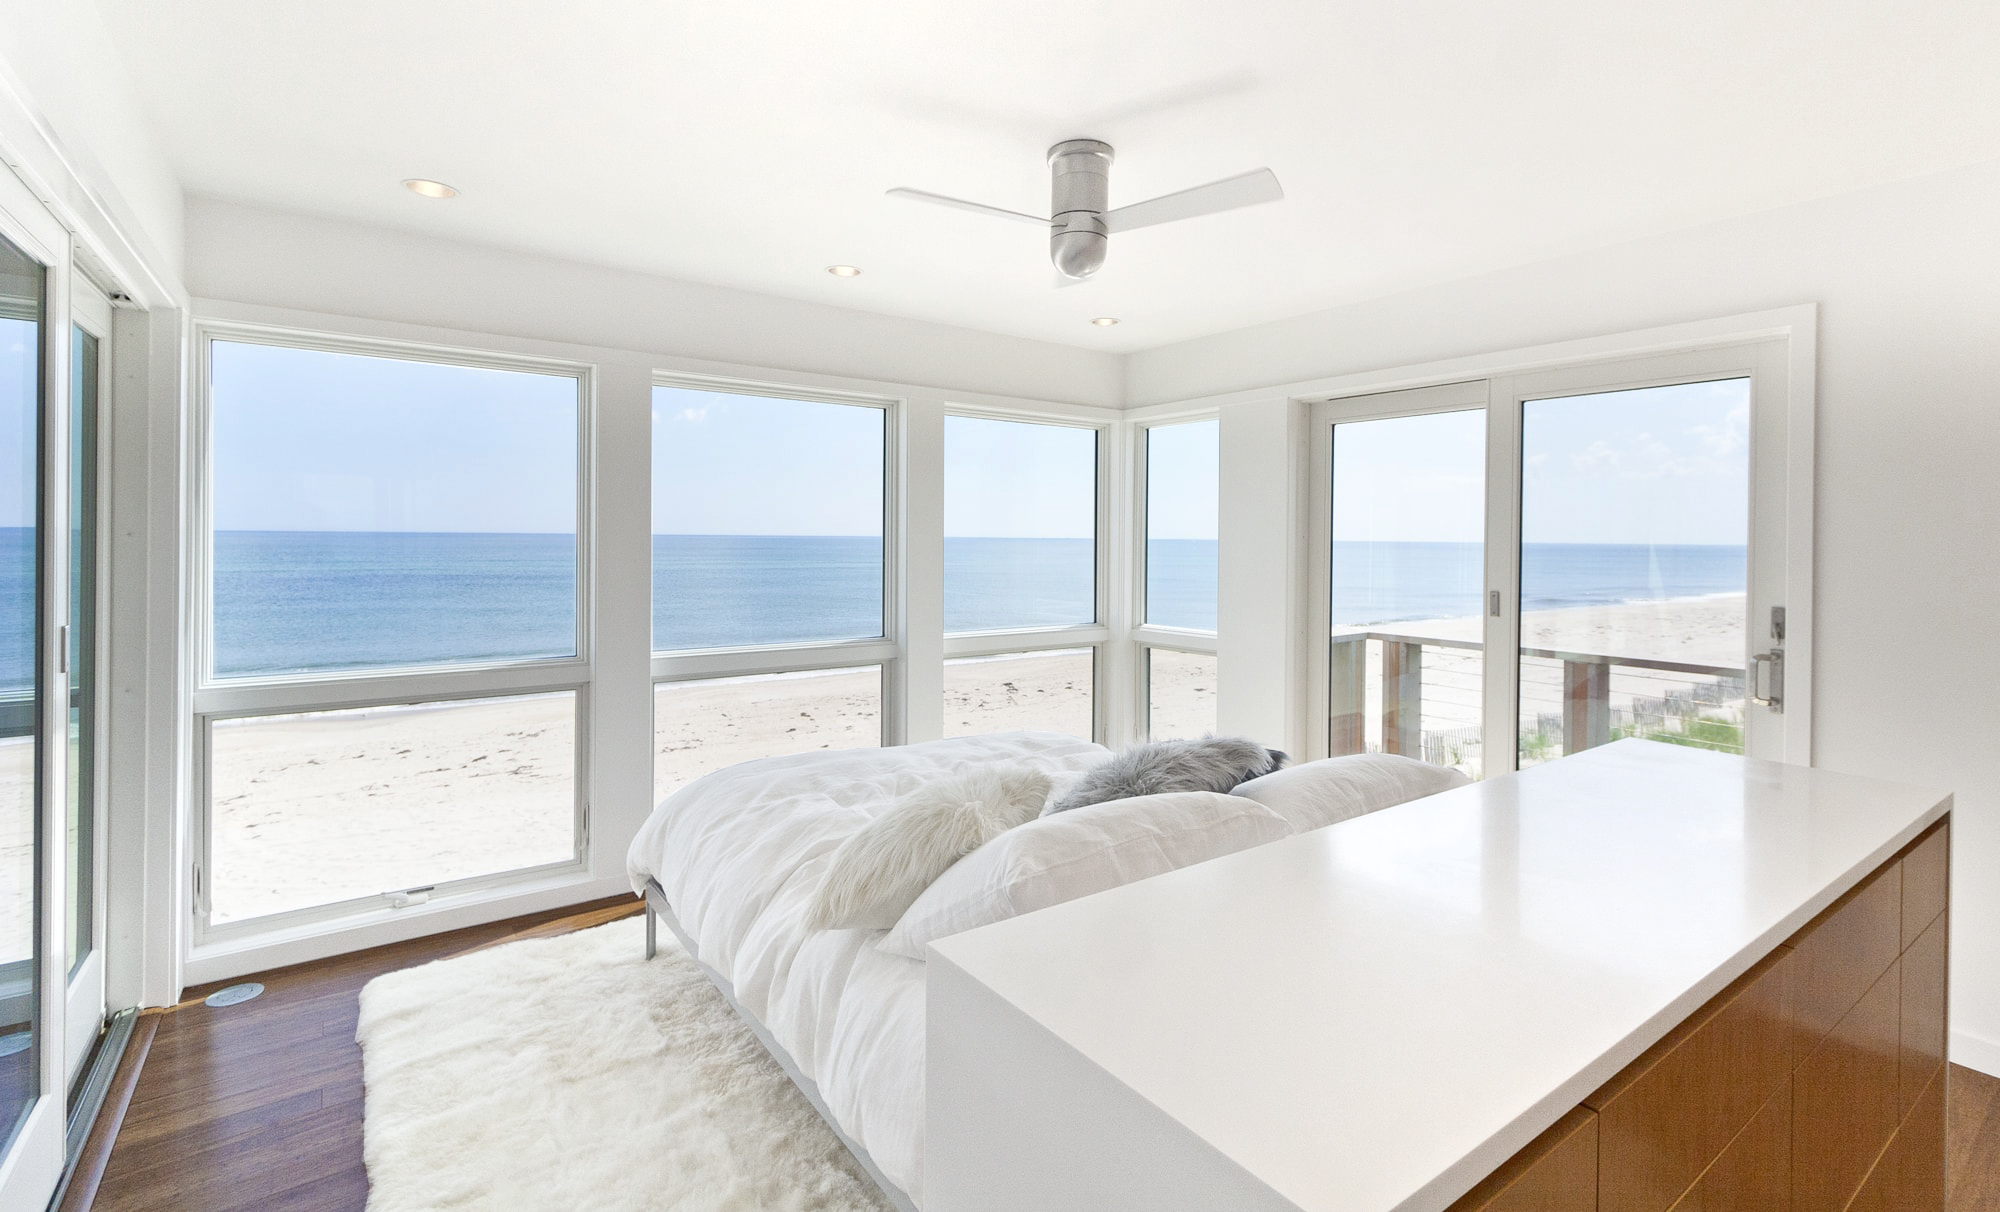 13-res4-resolution-4-architecture-modern-modular-home-prefab-dune-road-beach-house-interior-bedroom-04.jpg